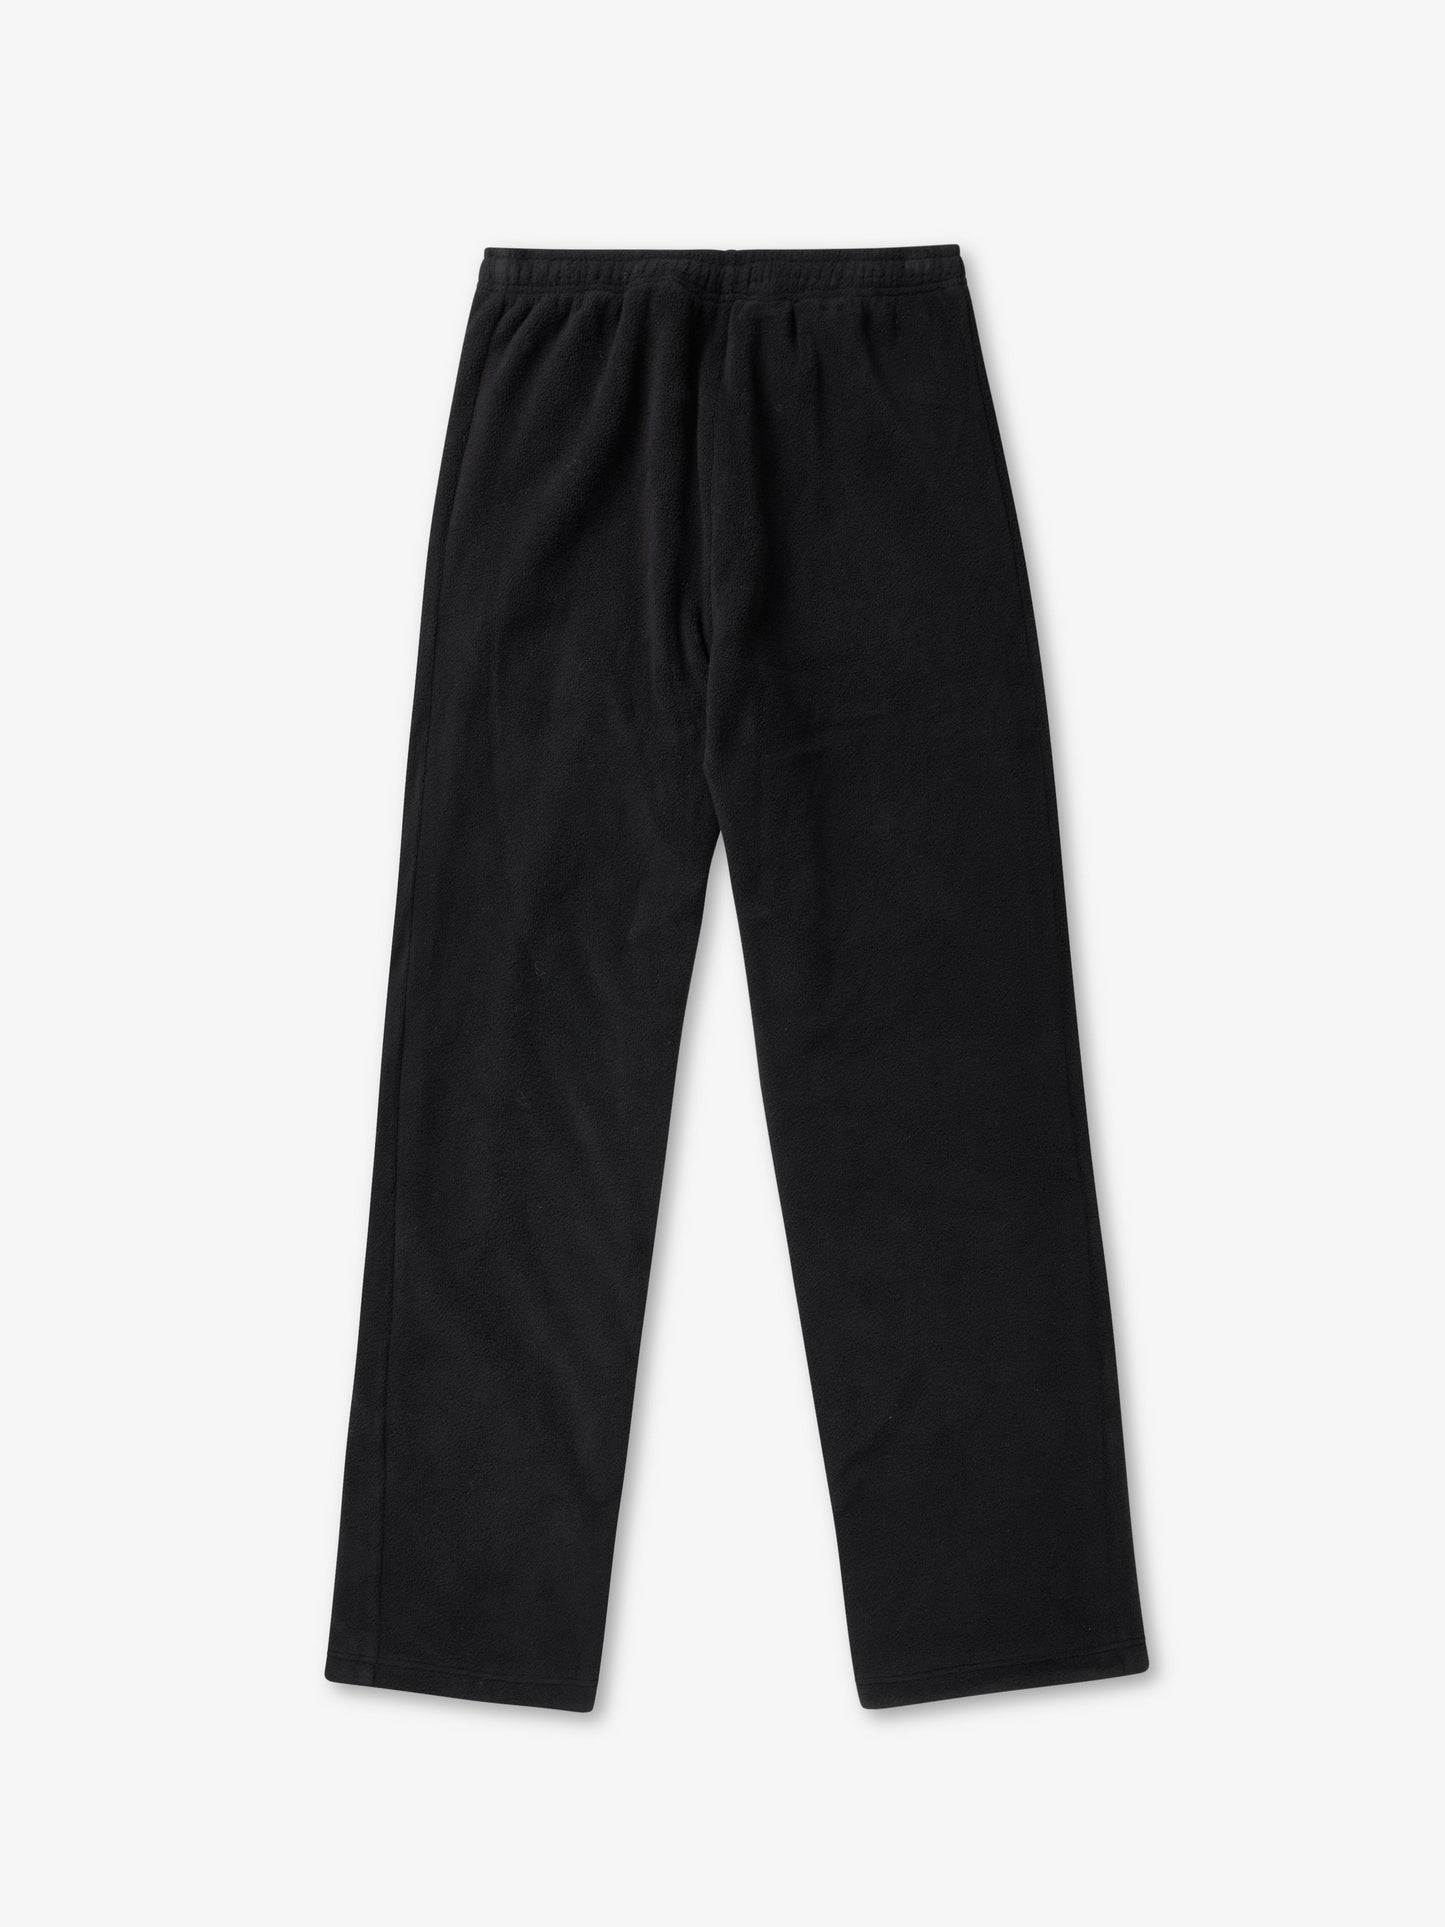 7 DAYS Fleece Pants Pants 001 Black